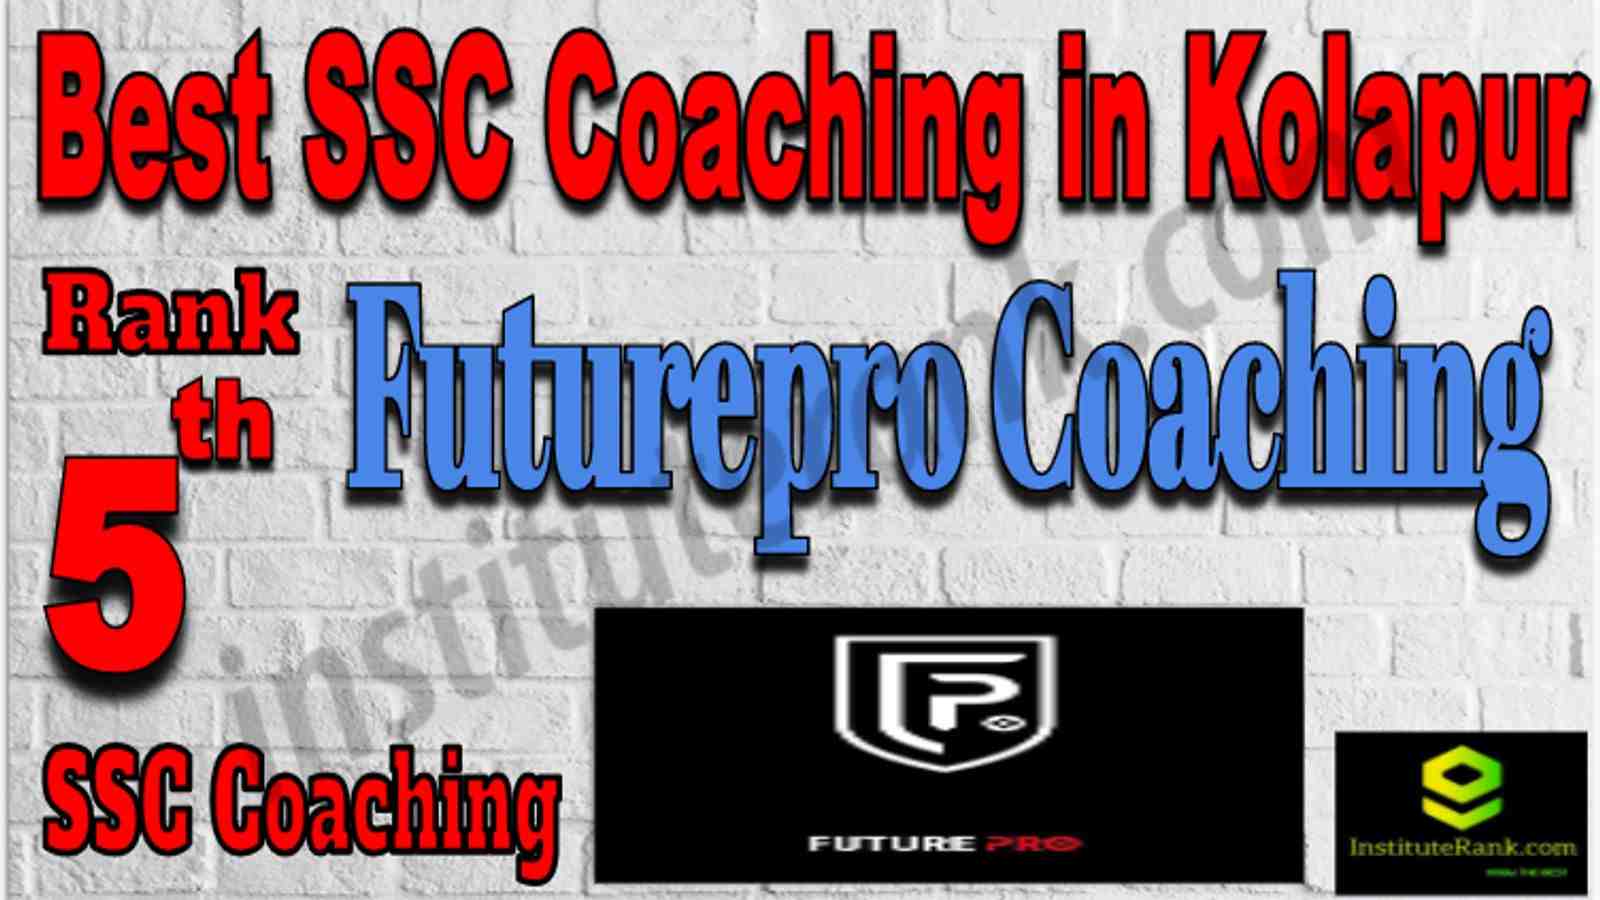 Rank 5 Best SSC Coaching in Kolapur